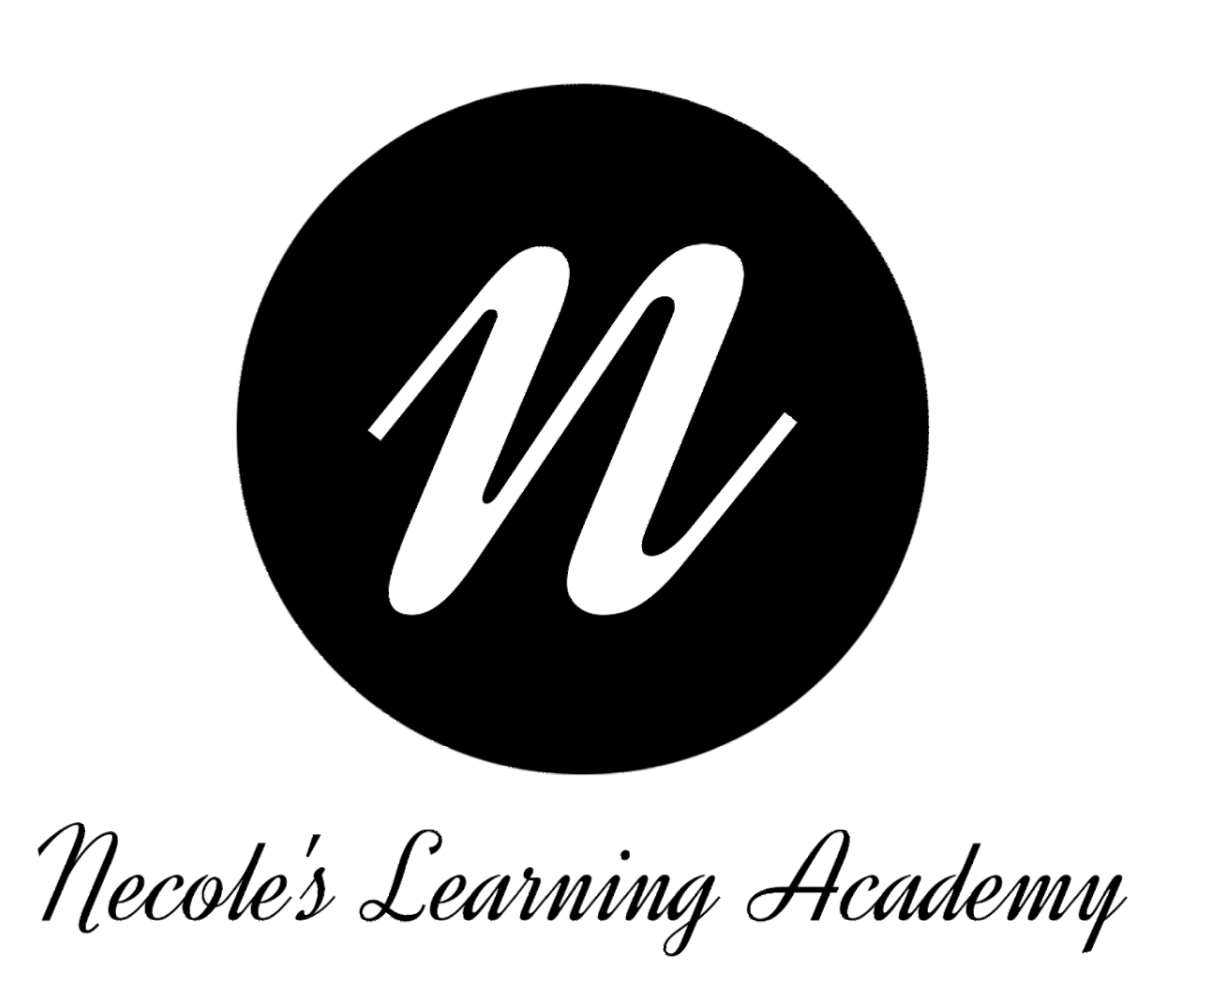 Necole's Learning Academy